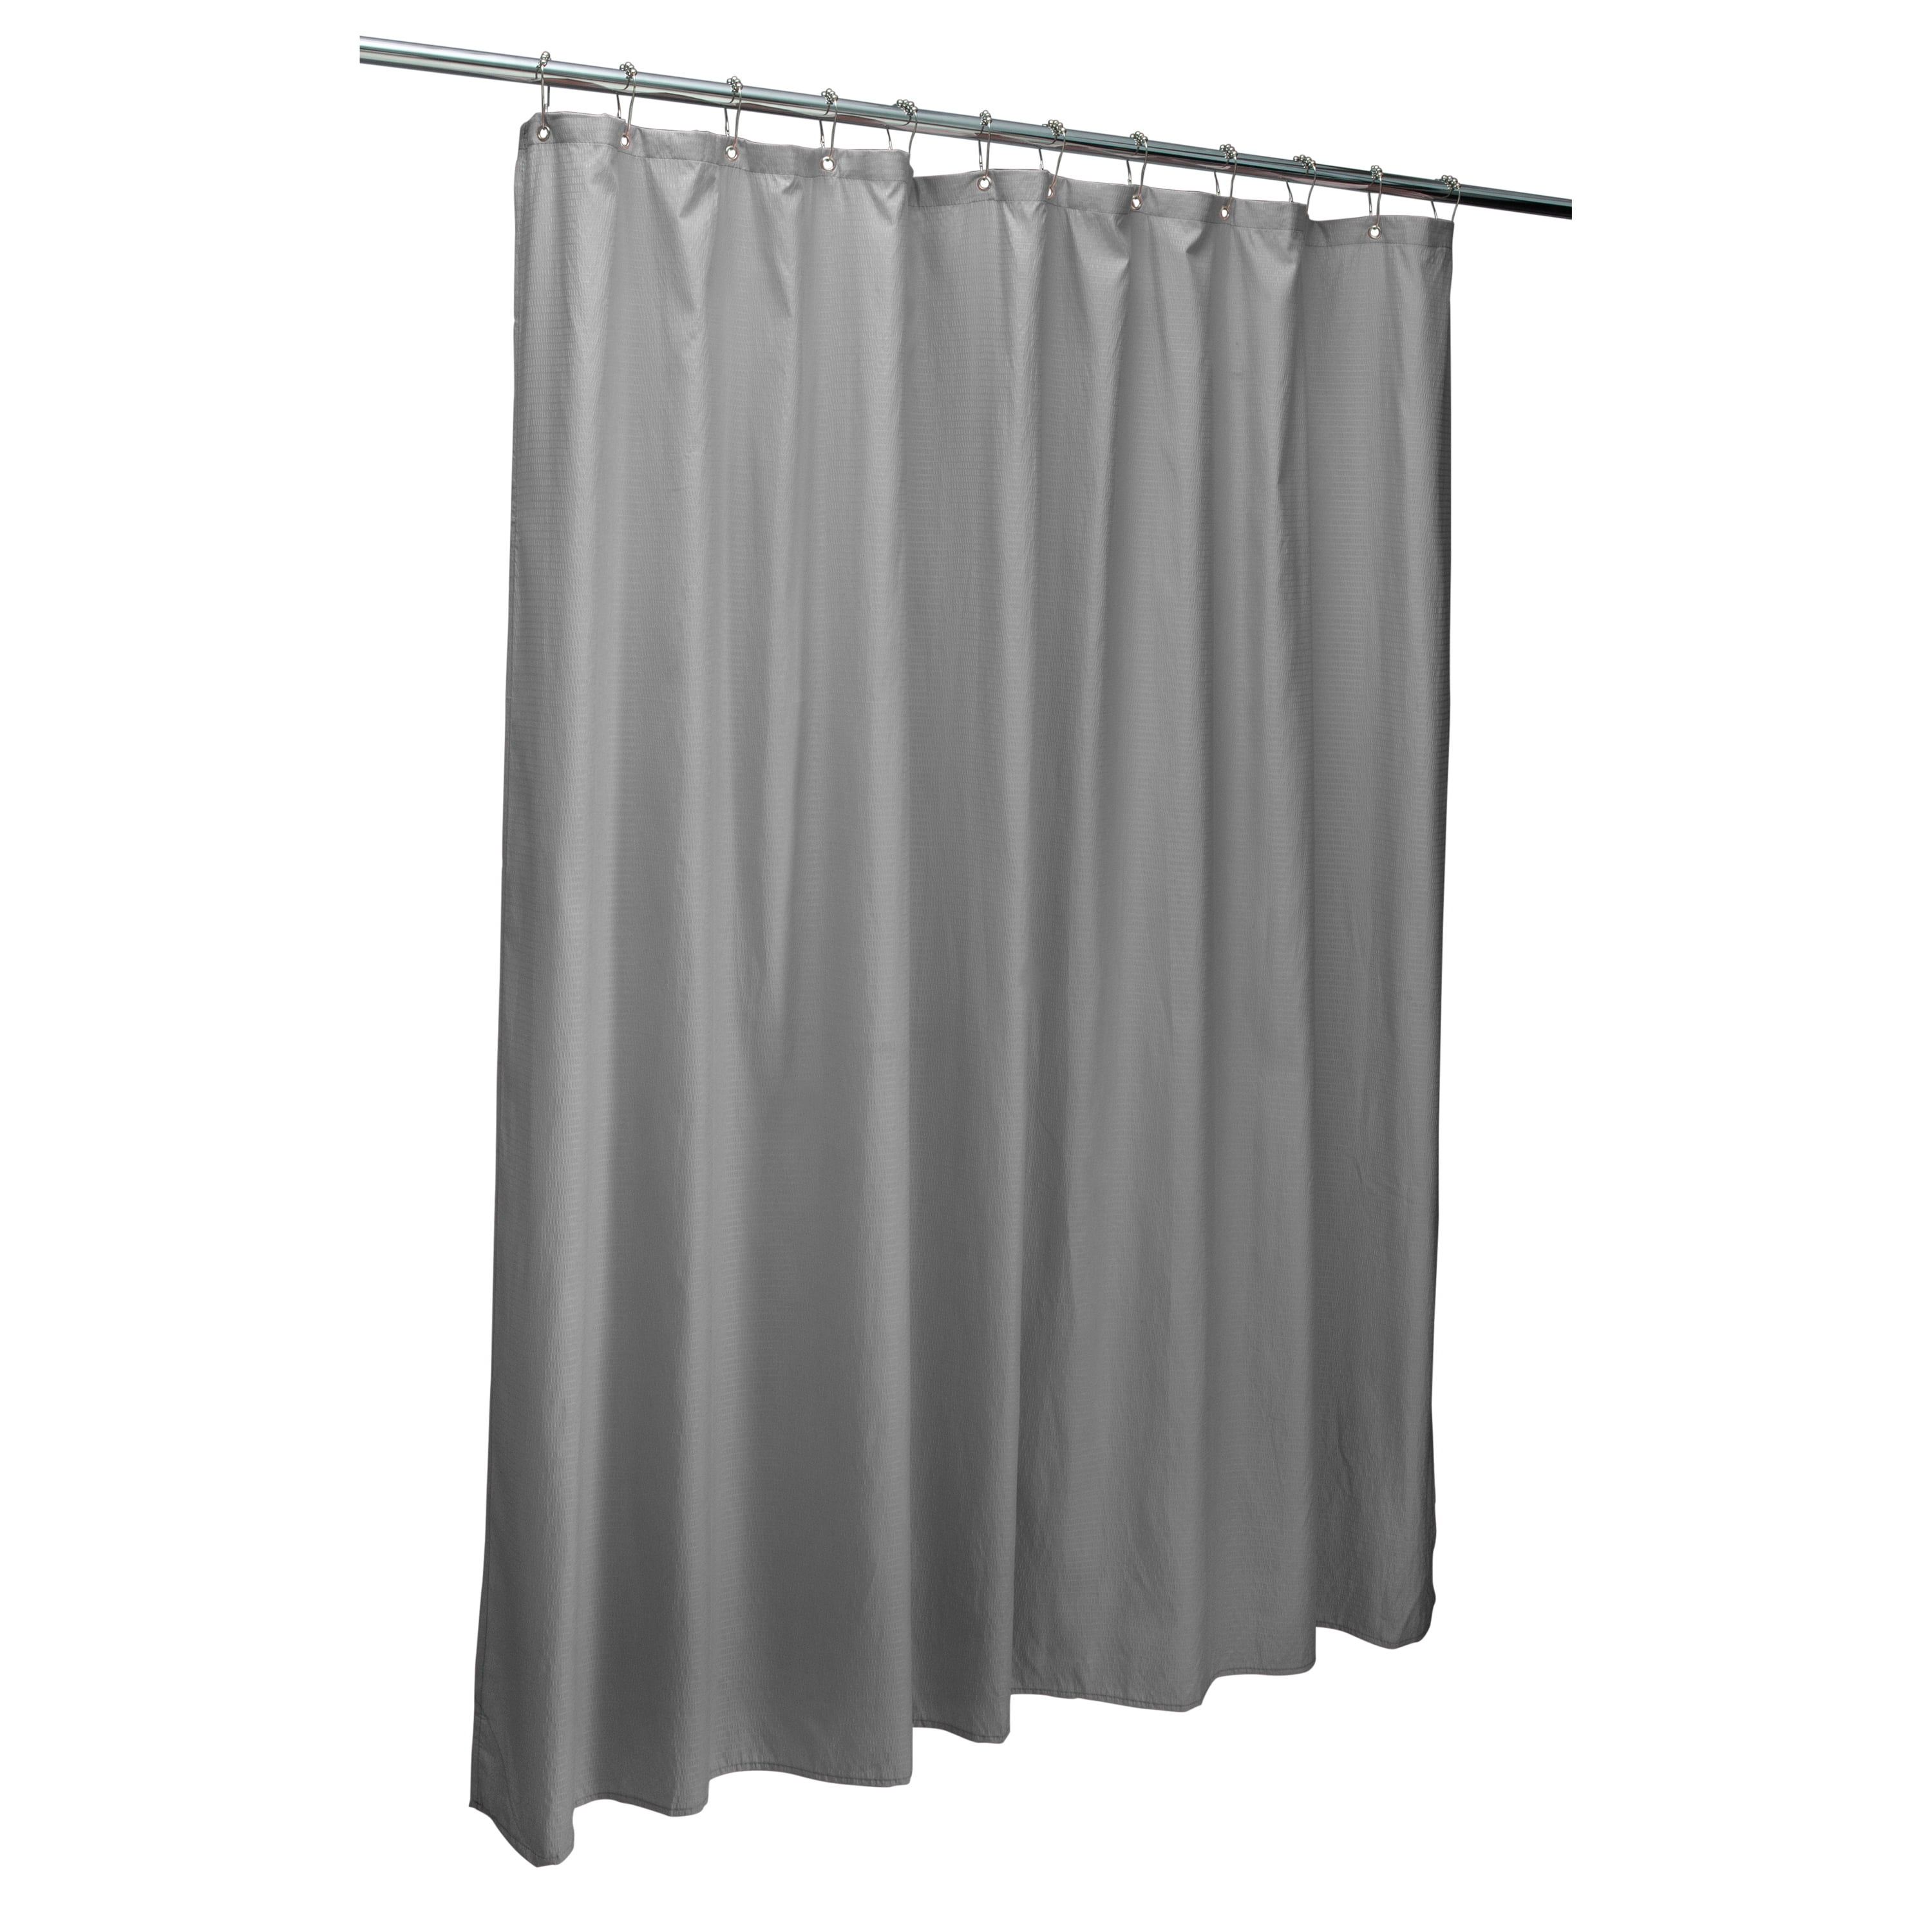 Decorative Sheer Fabric Shower Curtain, Silver Metallic Shower Curtain